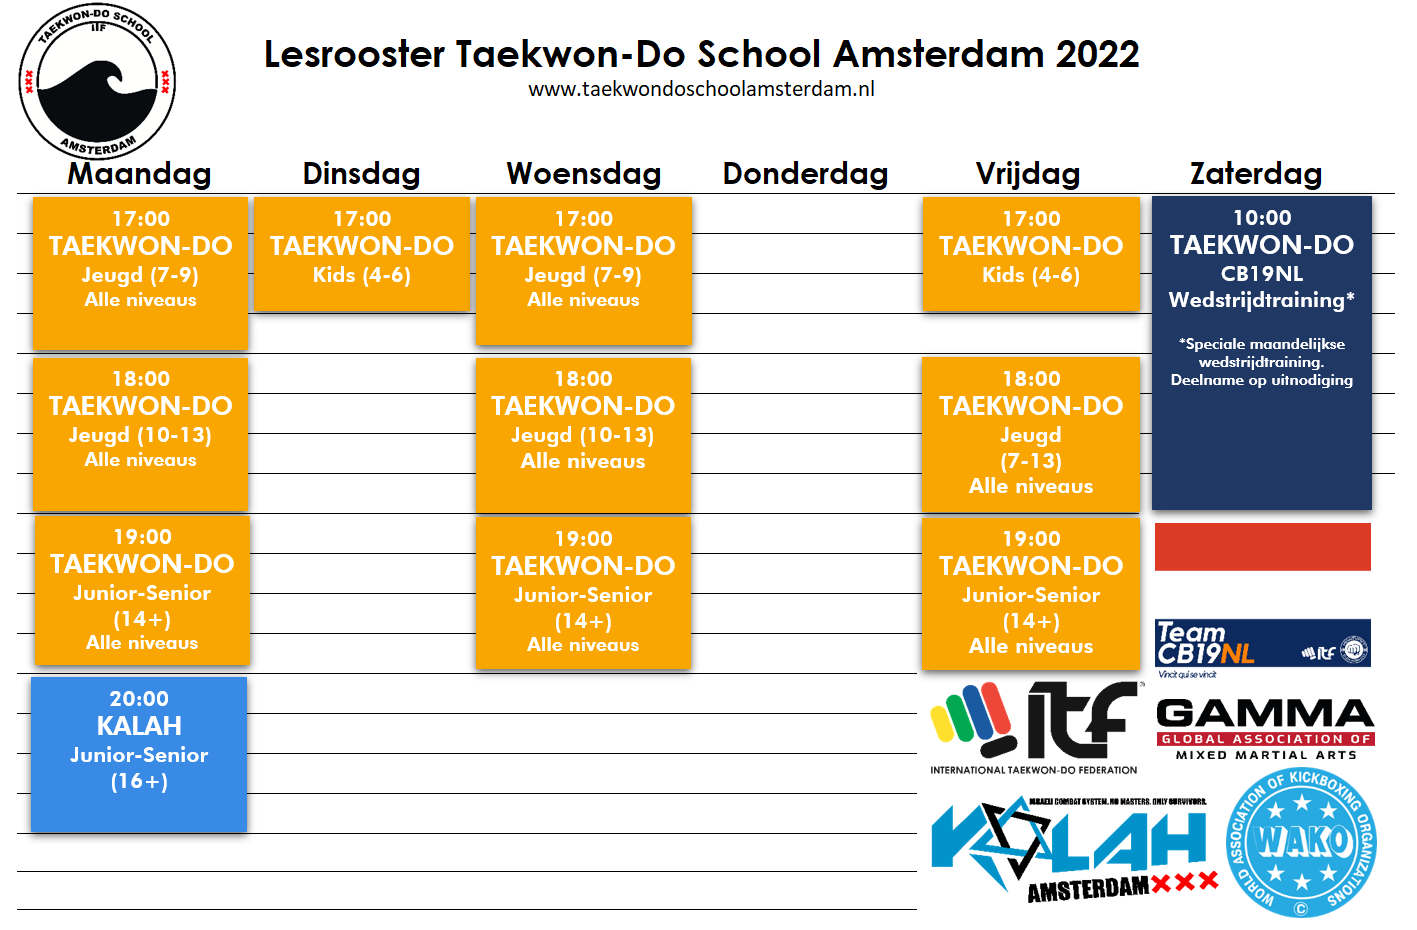 Lesrooster Taekwon-Do School Amsterdam 2022b